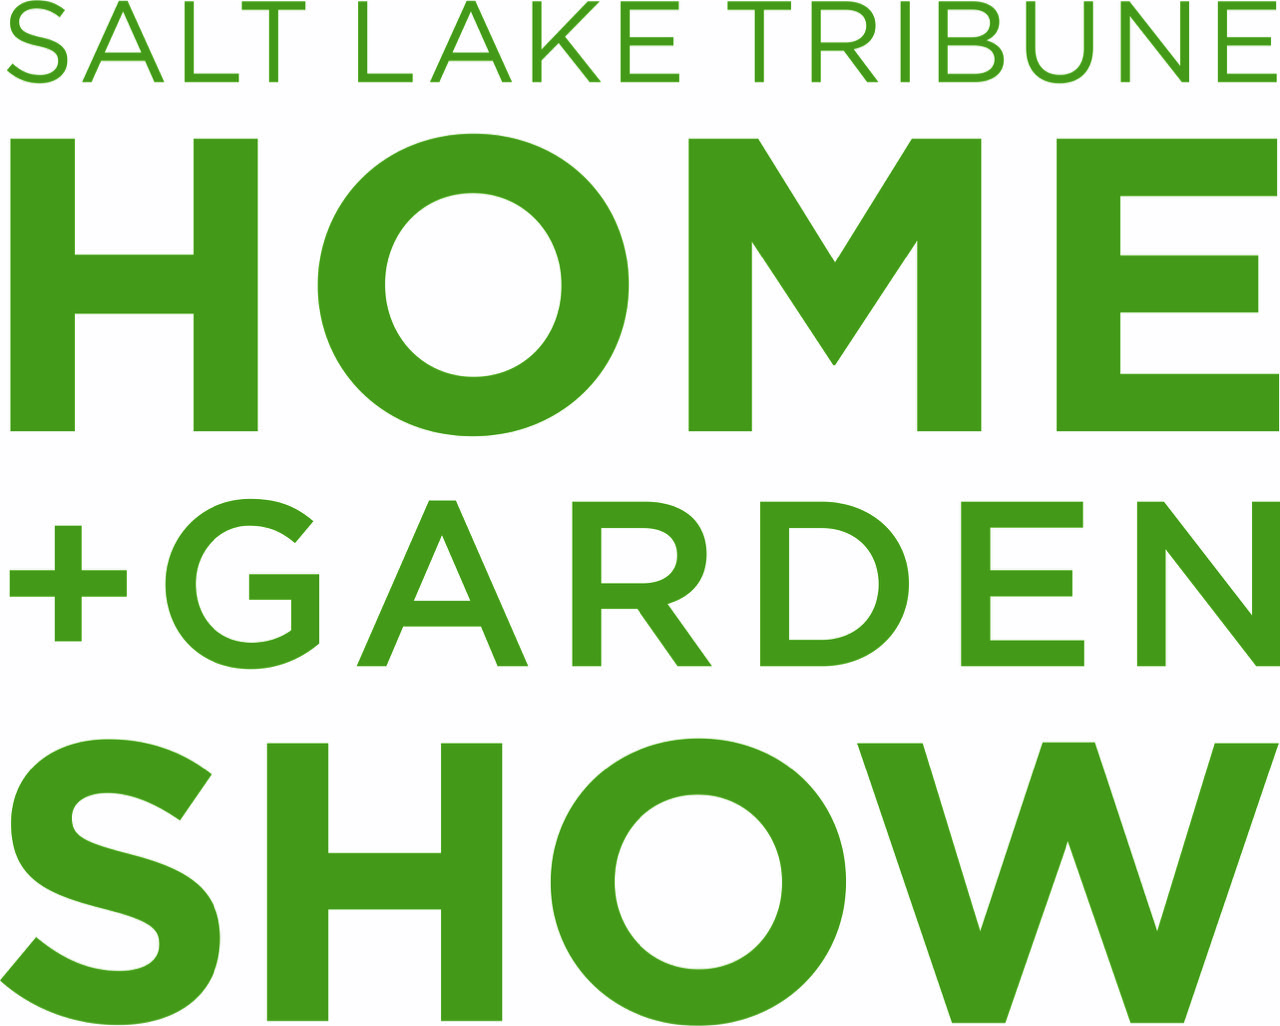 Salt Lake Tribune Home + Garden Show Logo